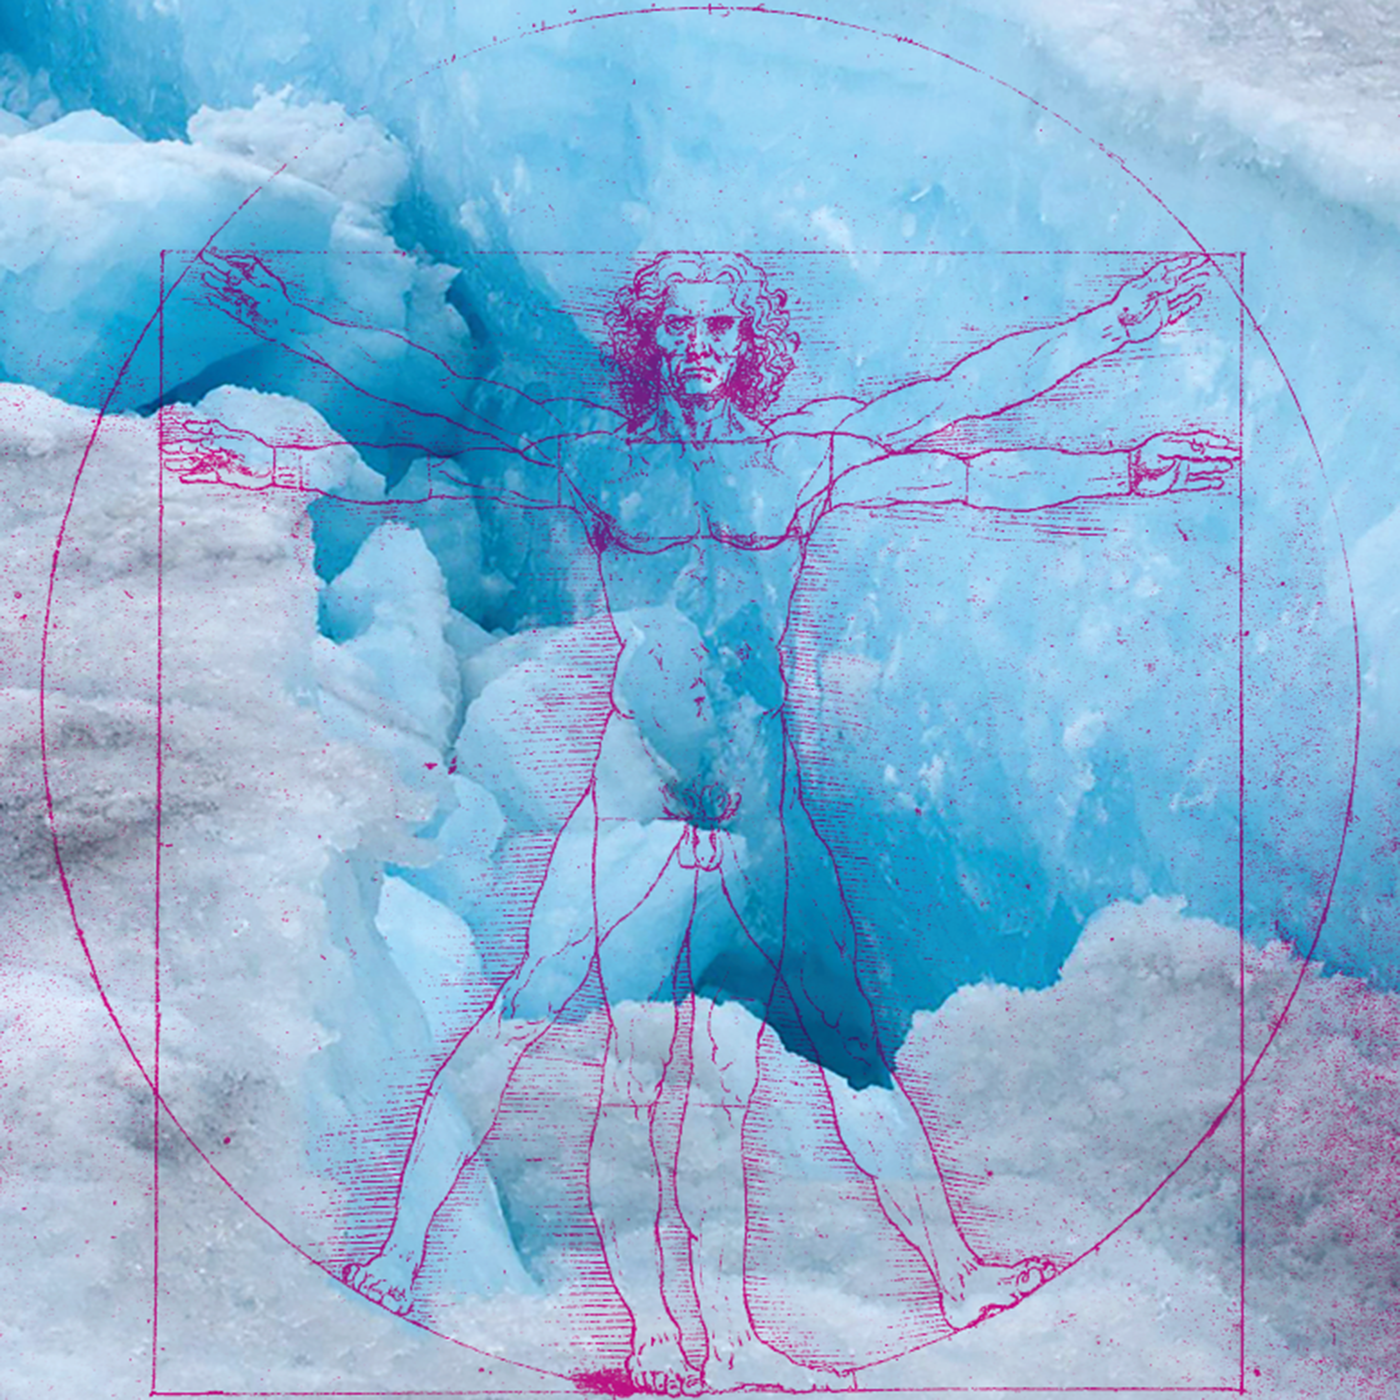 Leonardo da Vinci's Vitruvian Man overlaid on a photo of a glacier.